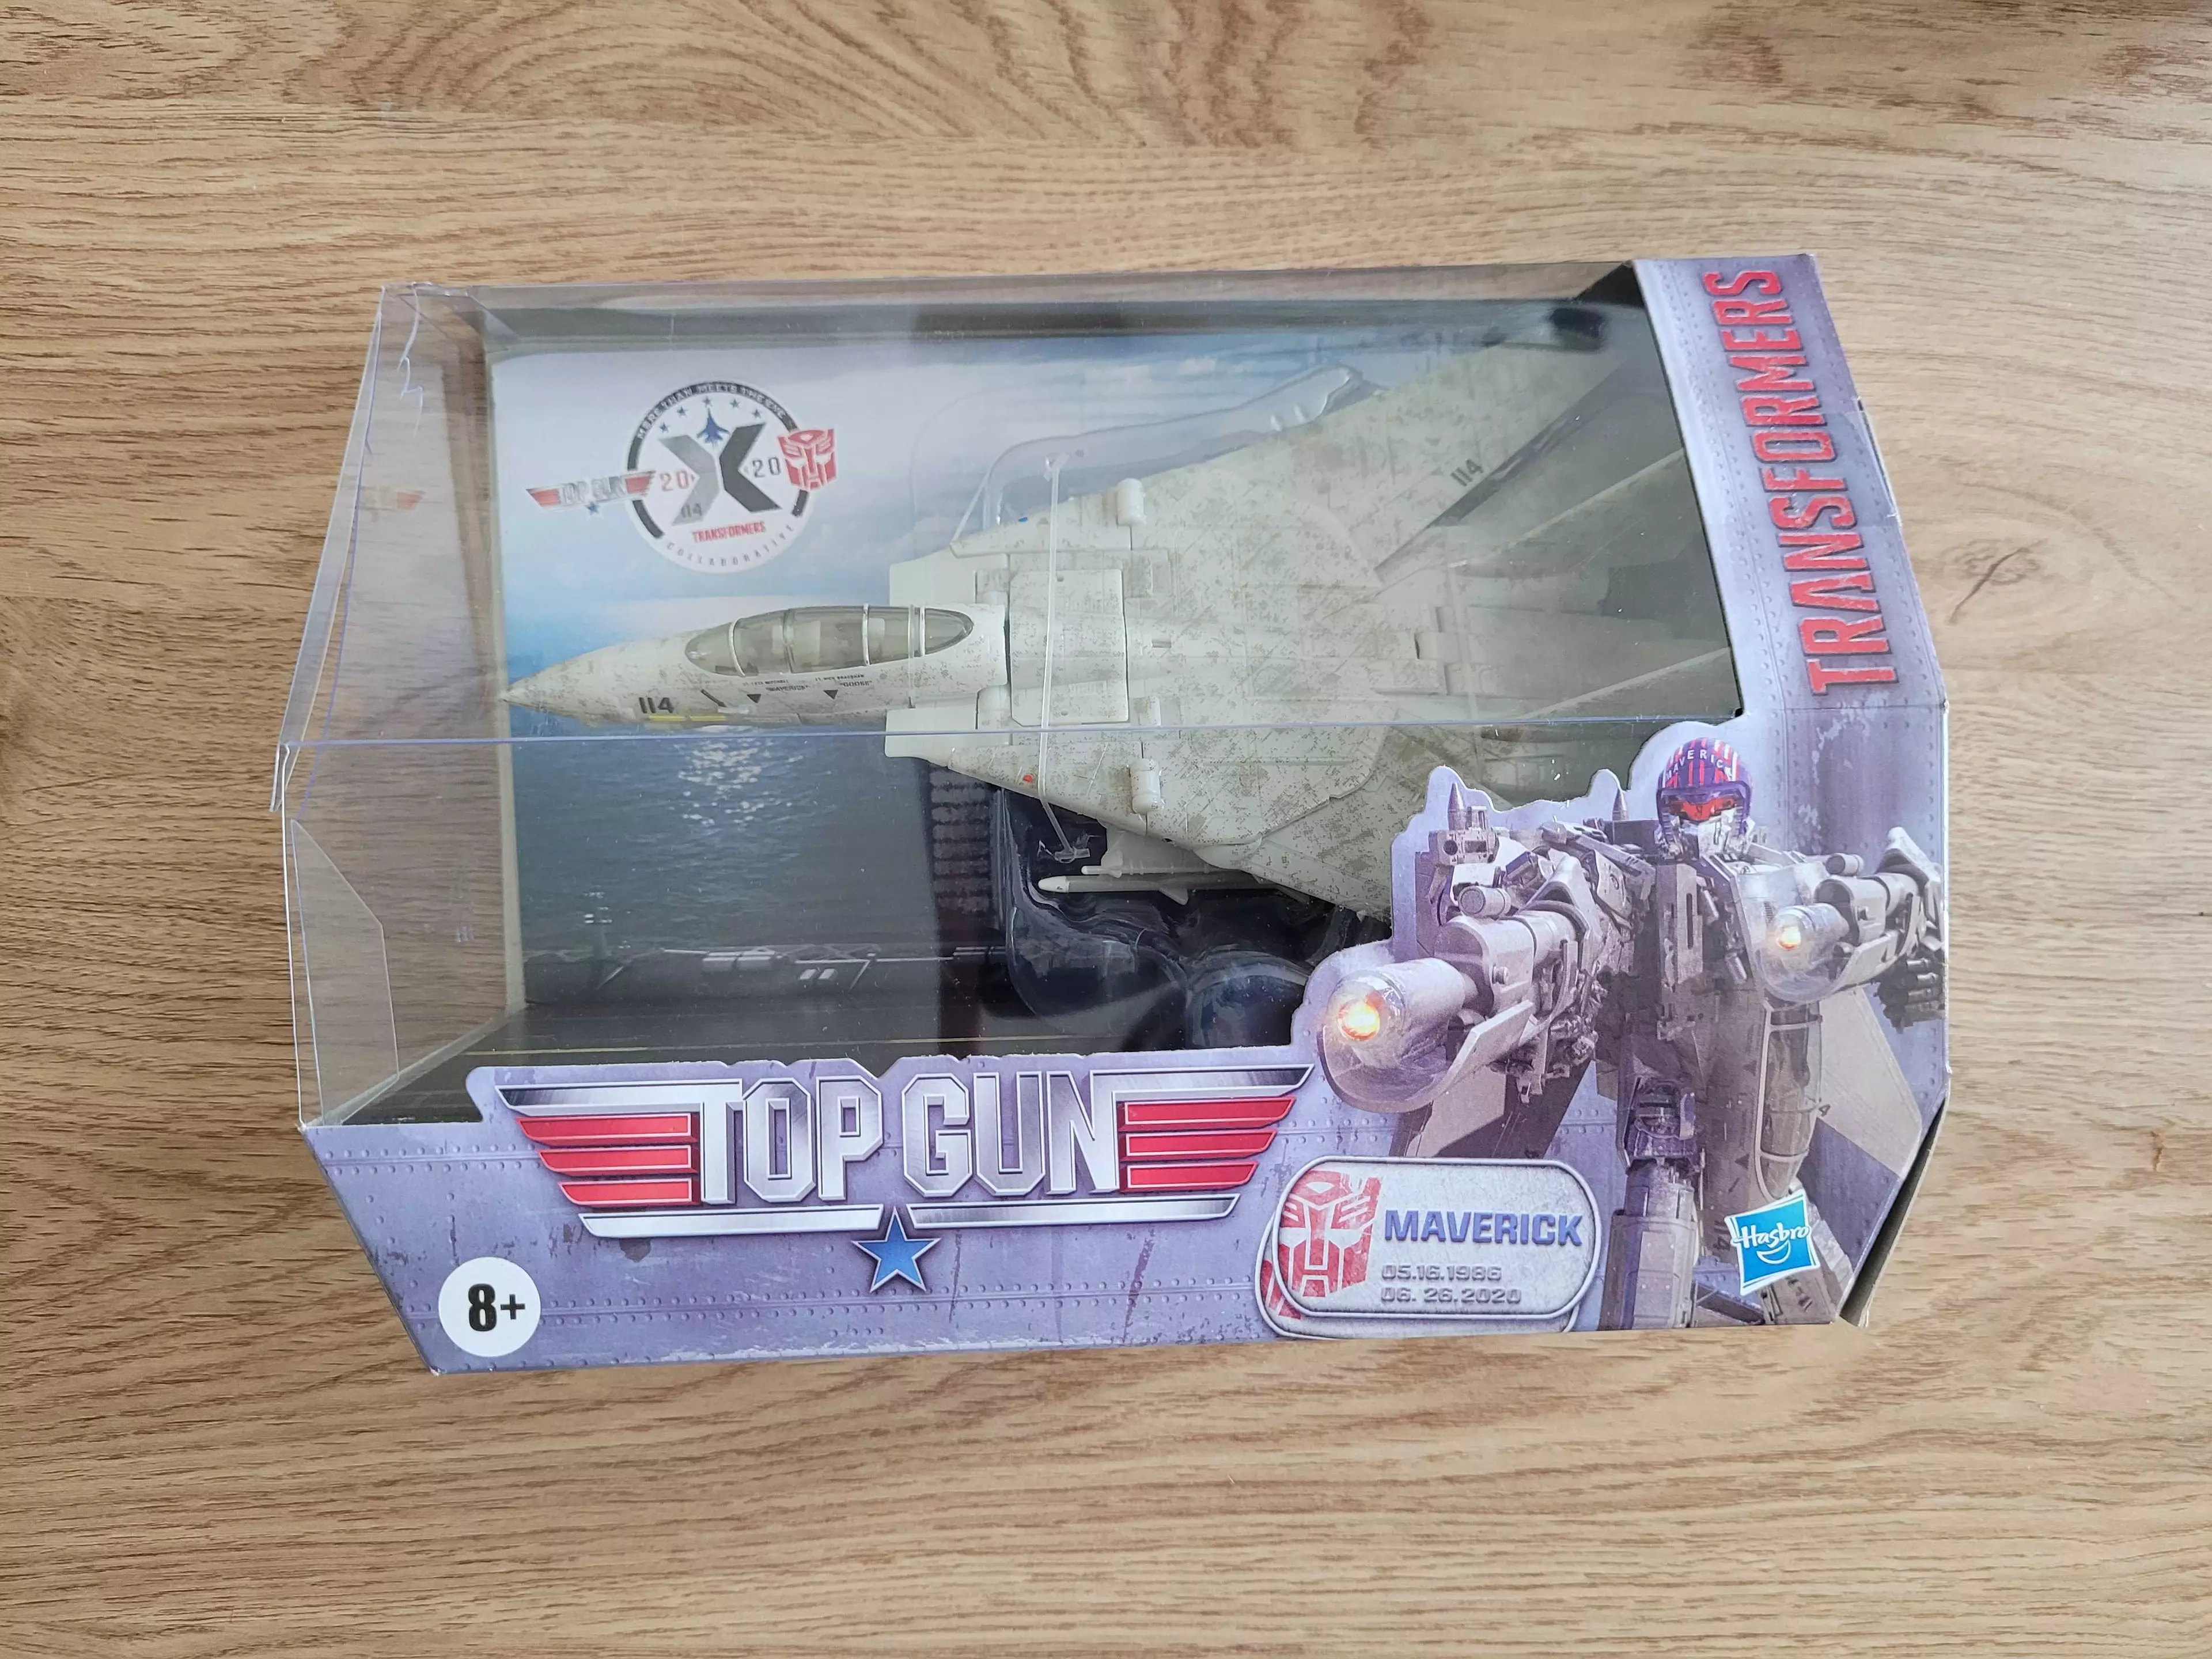 Transformers Maverick, in his very Top Gun box /